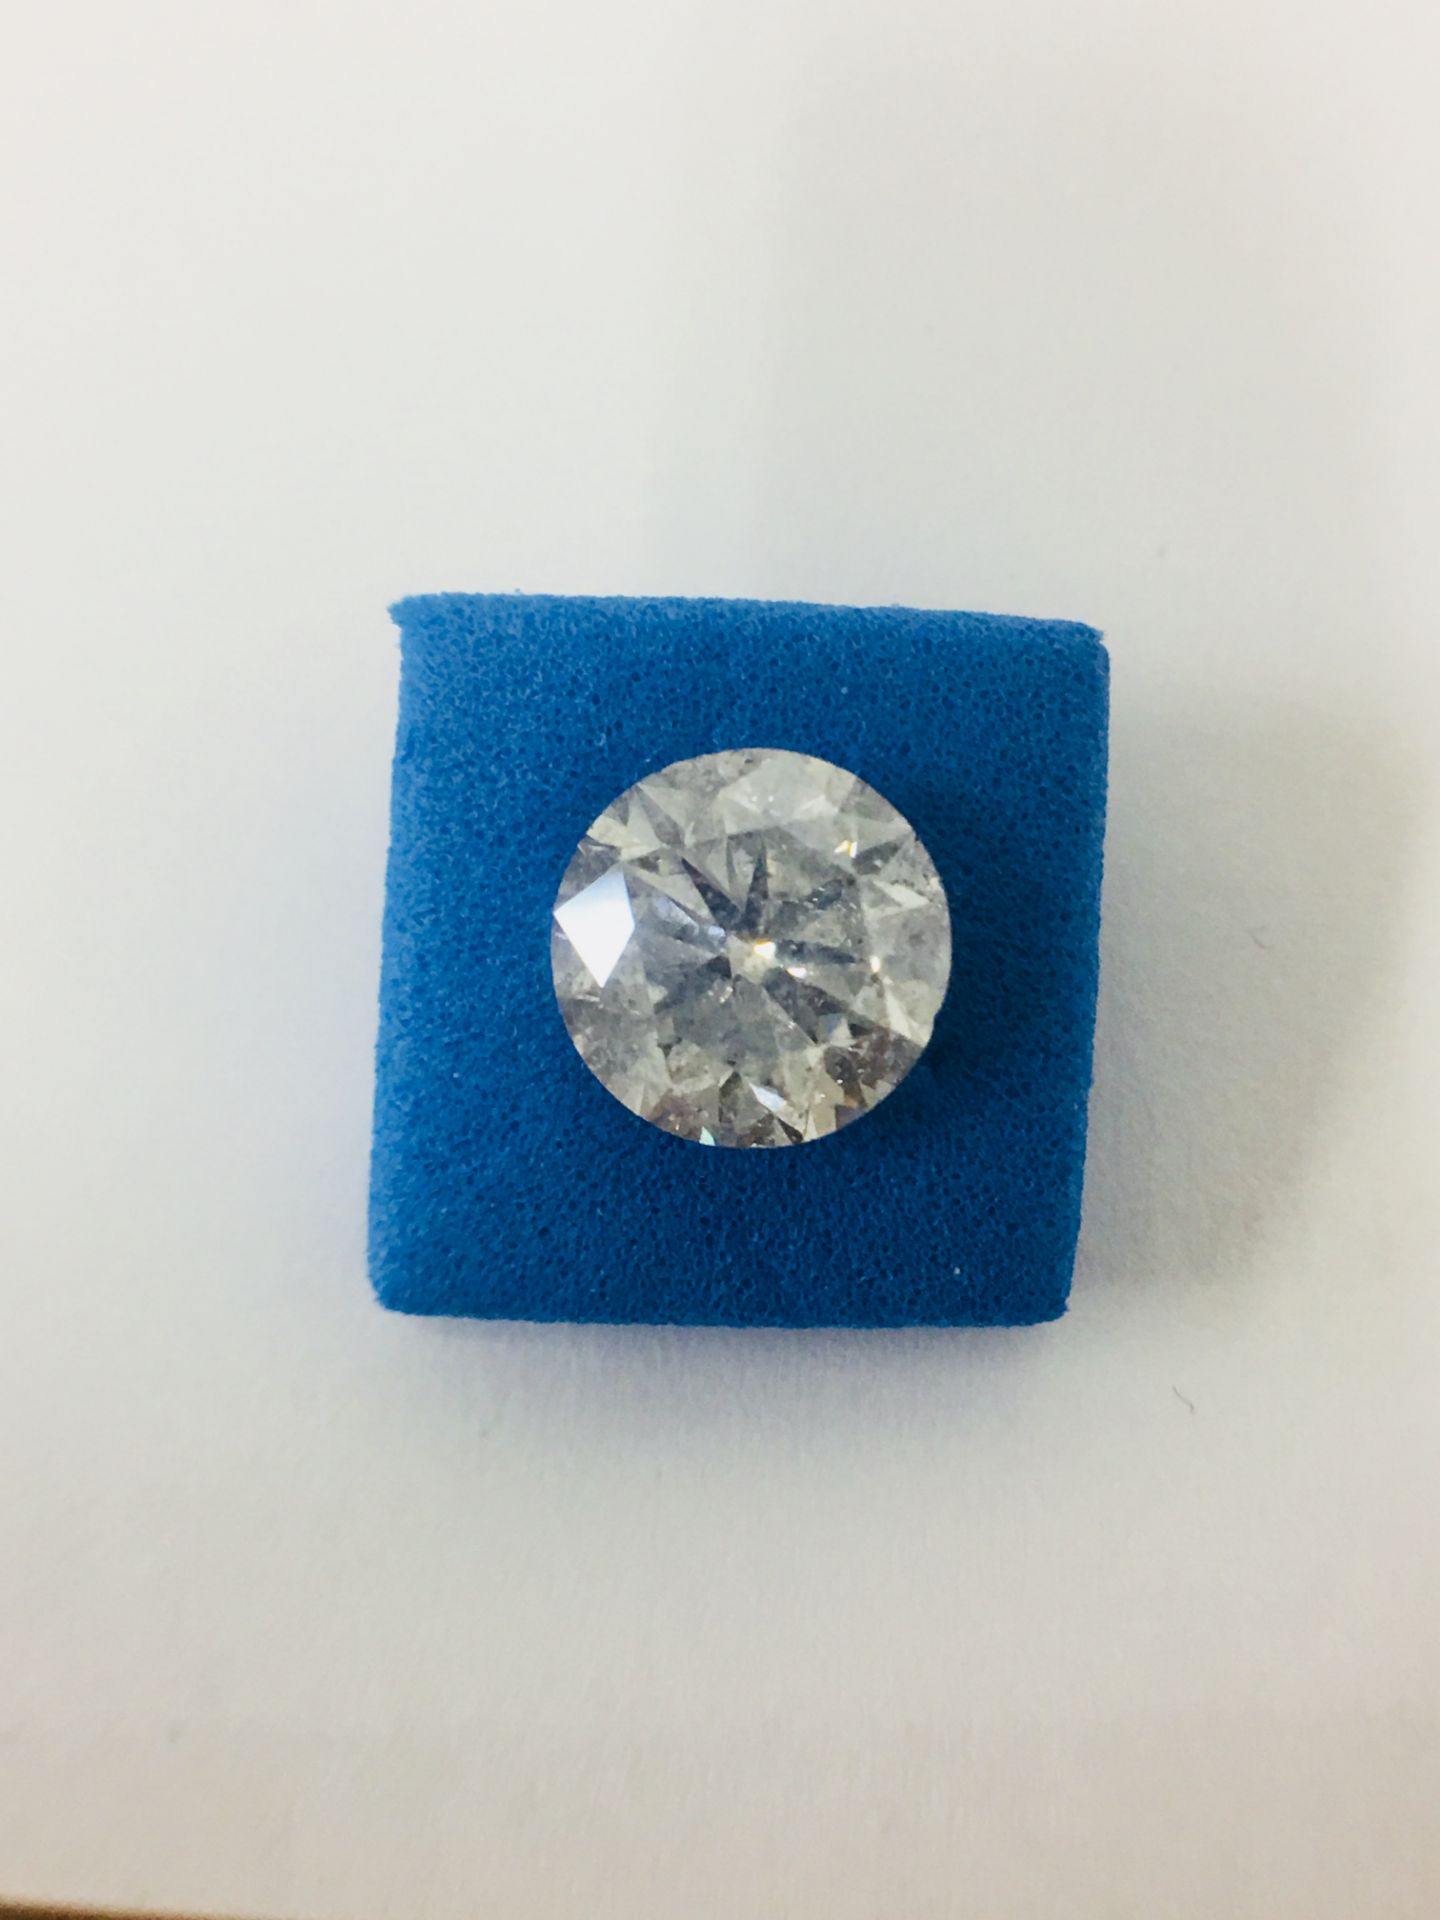 2.41ct brilliant cut natural Diamond, H colour i2 clarity,diamond is enhanced by laser